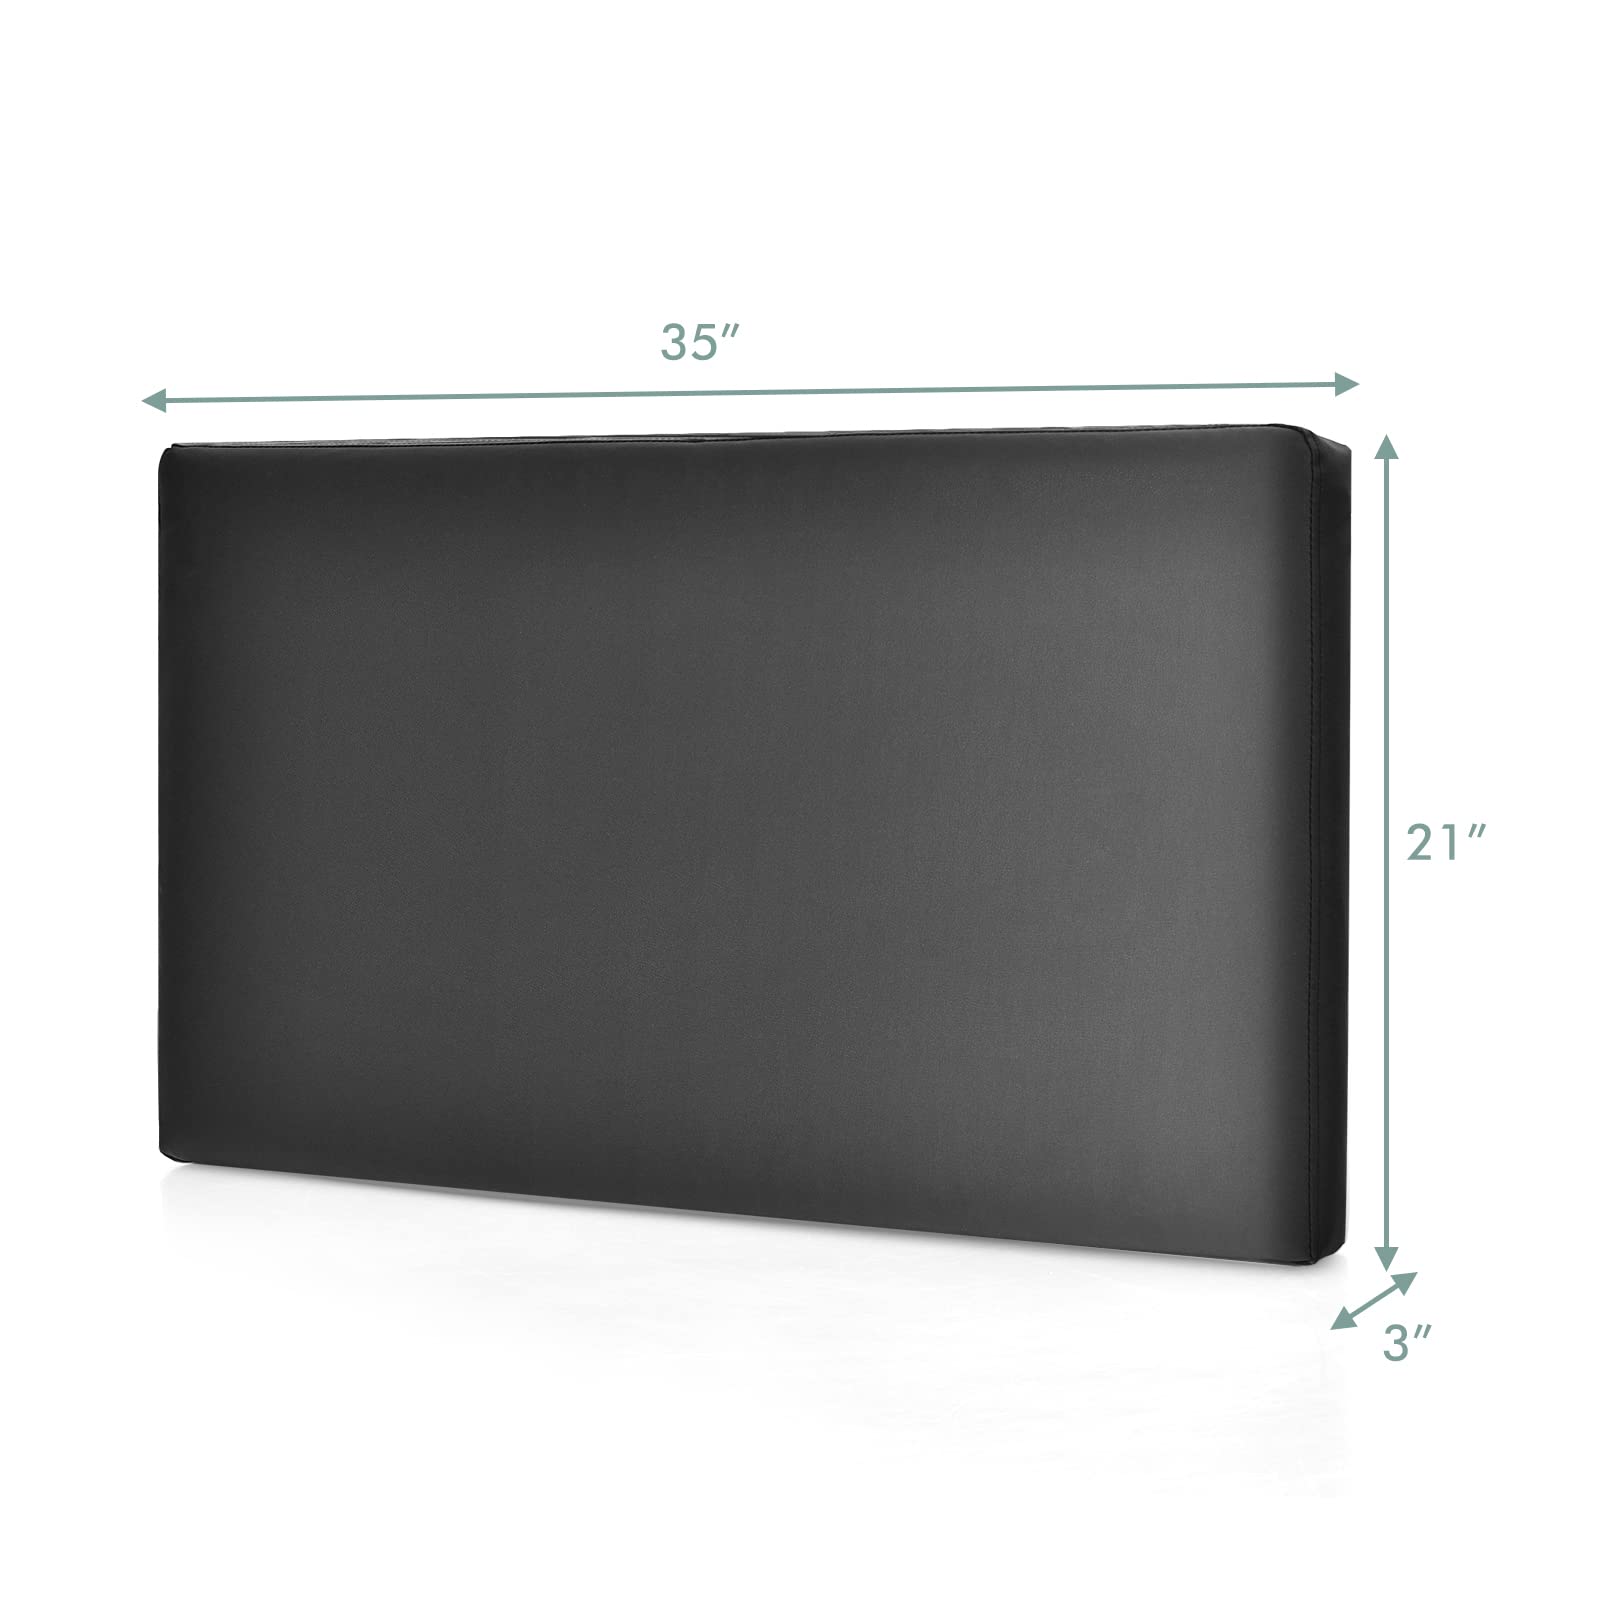 Giantex Upholstered Headboard, Wall-Mounted Sponge Padded Headboard with PU Leather Surface, 35"(L) x 21"(W)